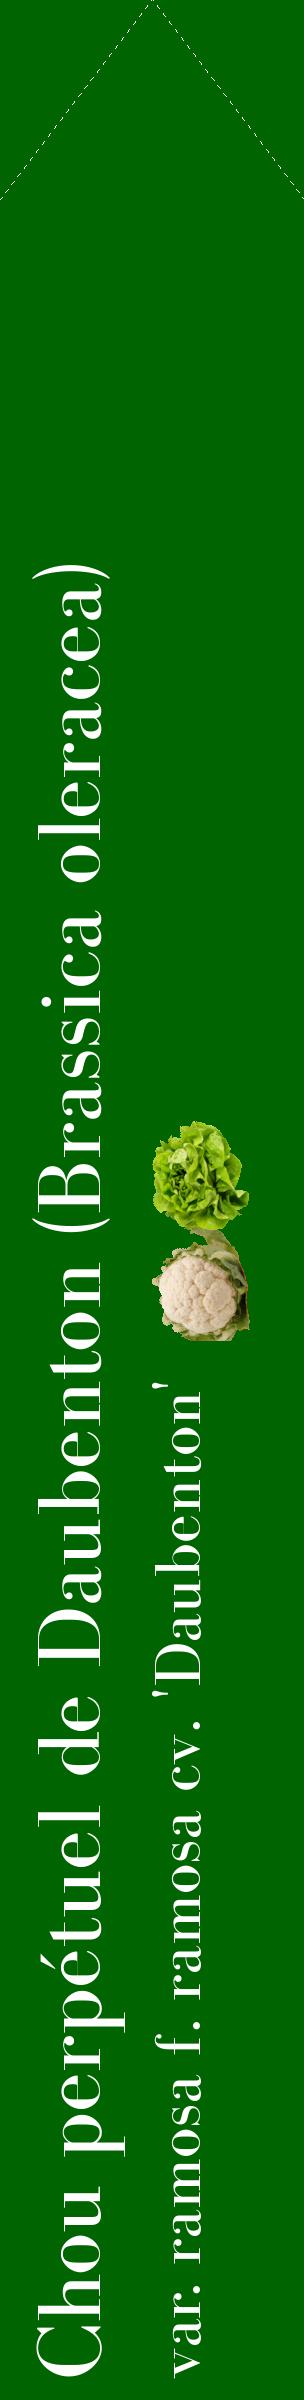 Étiquette de : Brassica oleracea var. ramosa f. ramosa cv. 'Daubenton' - format c - style blanche8_simplebod avec comestibilité simplifiée